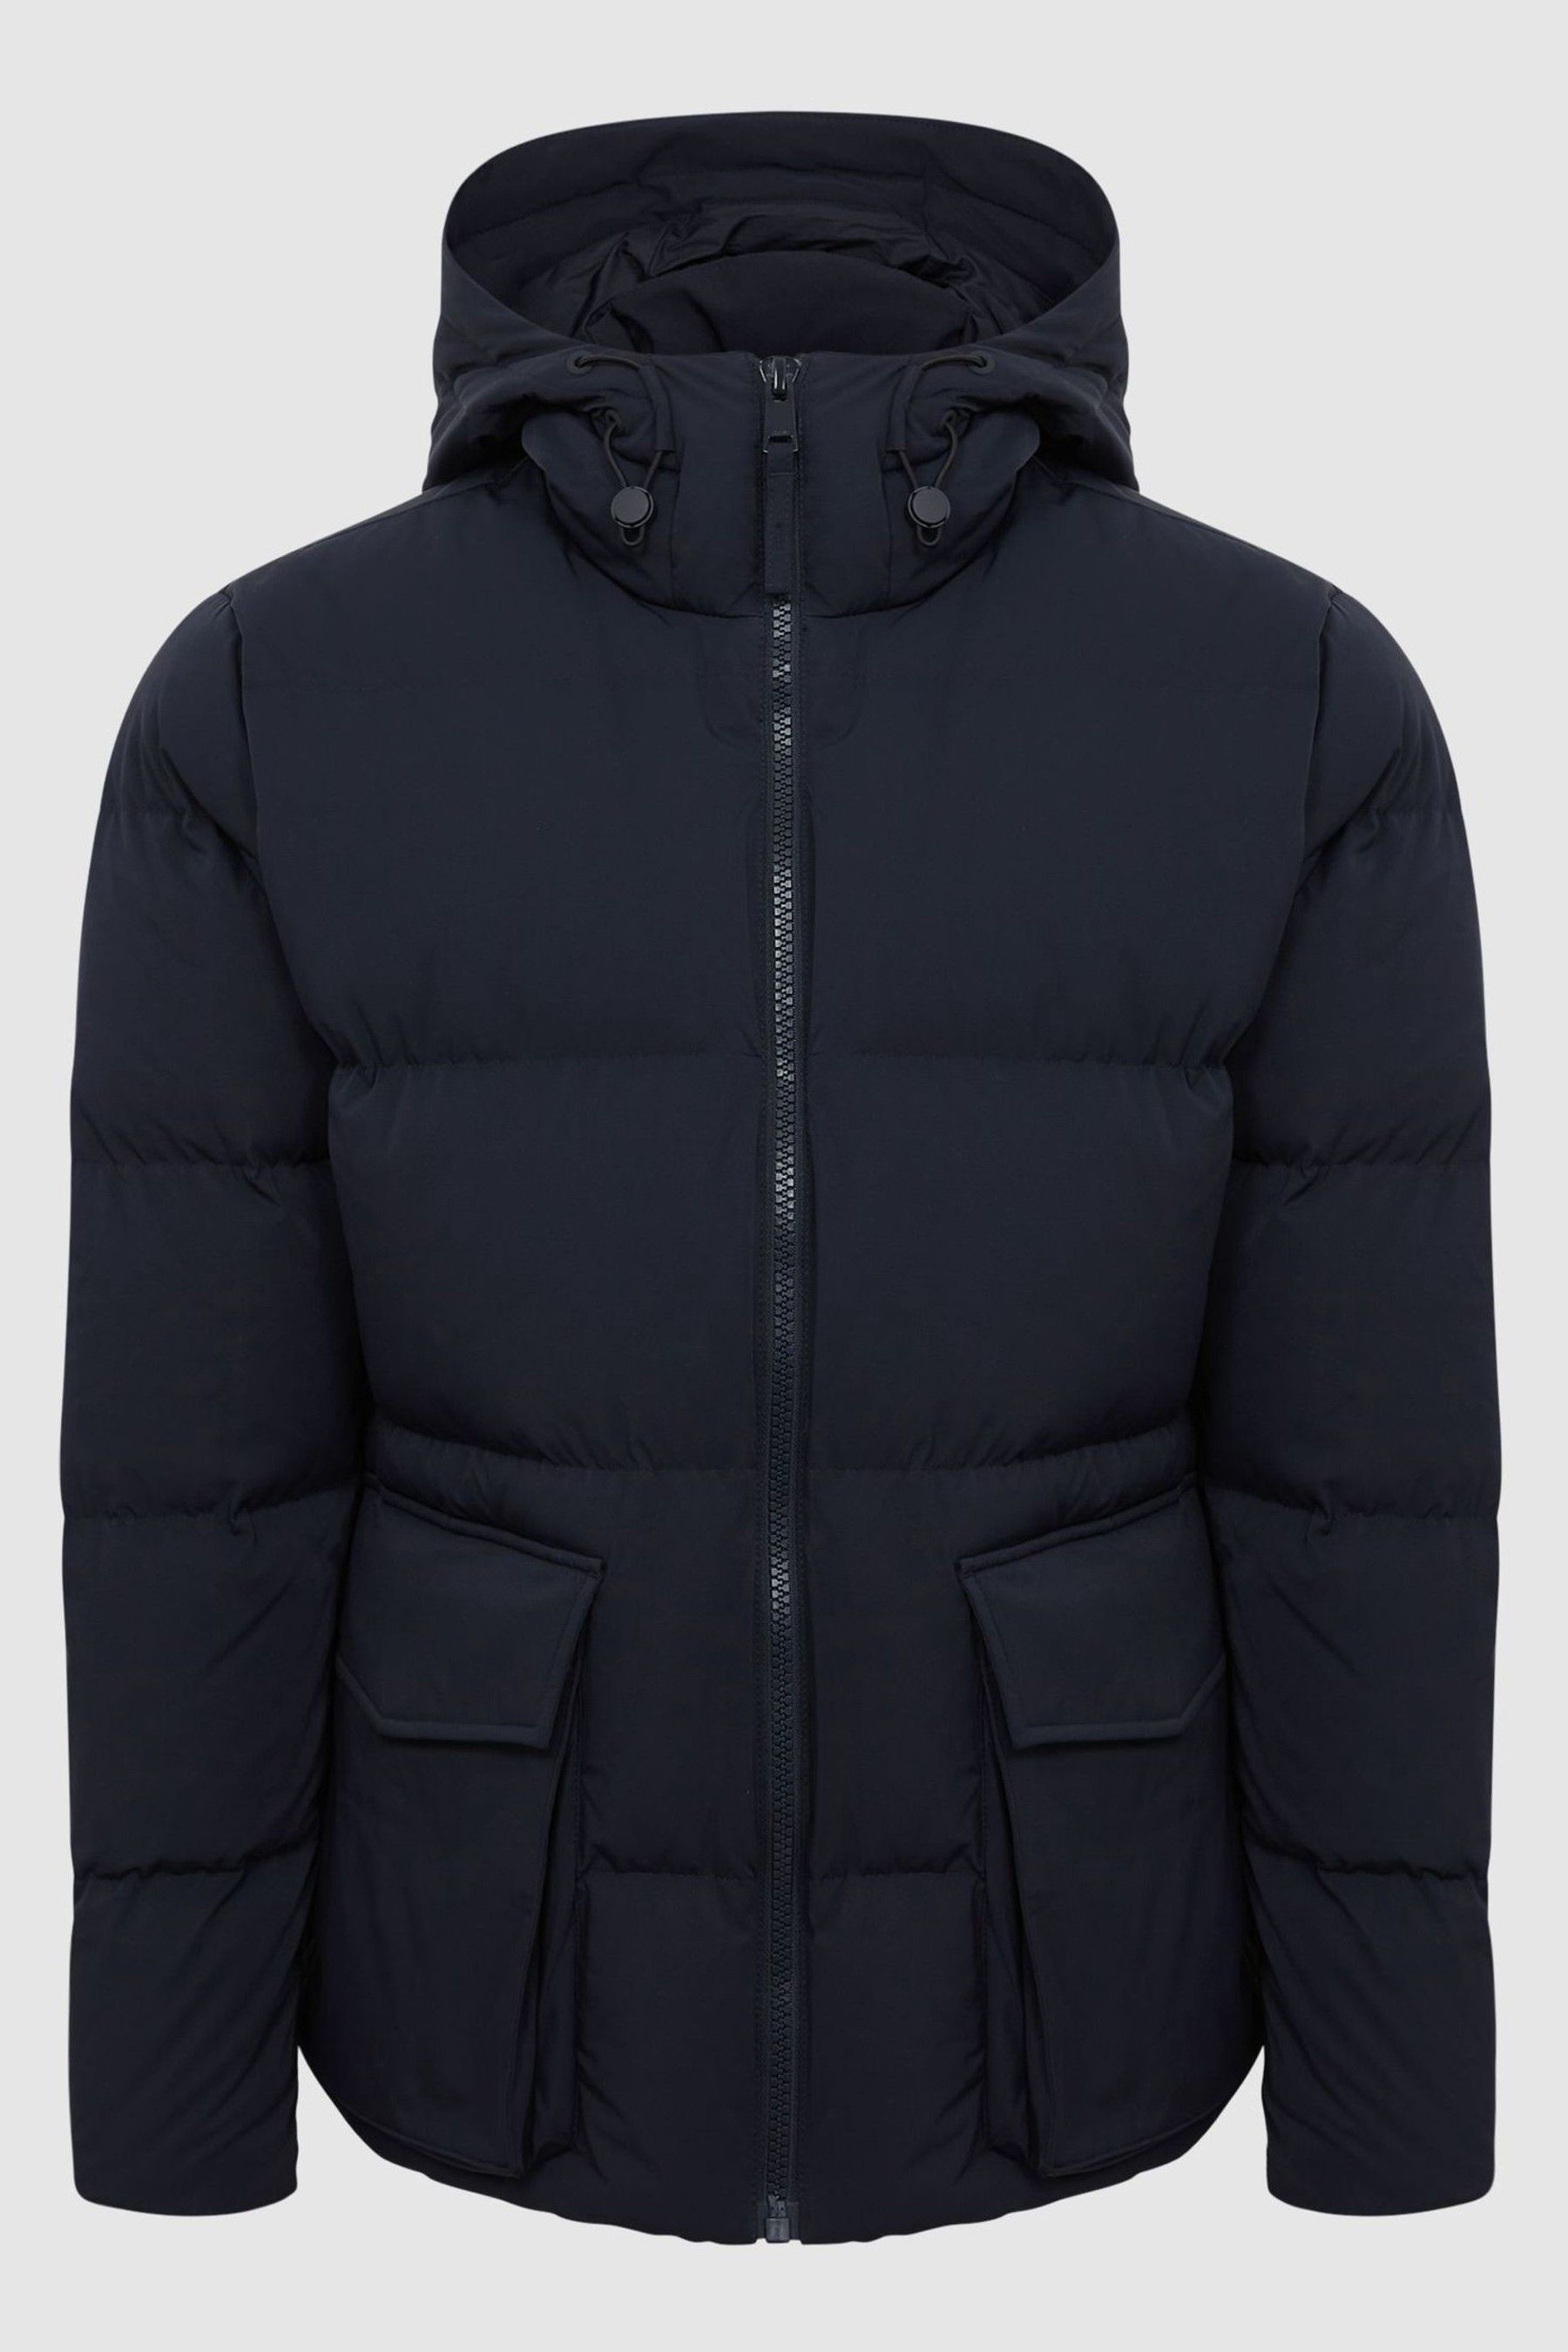 Buy Reiss Navy Ryder Short Puffer Jacket from the Next UK online shop